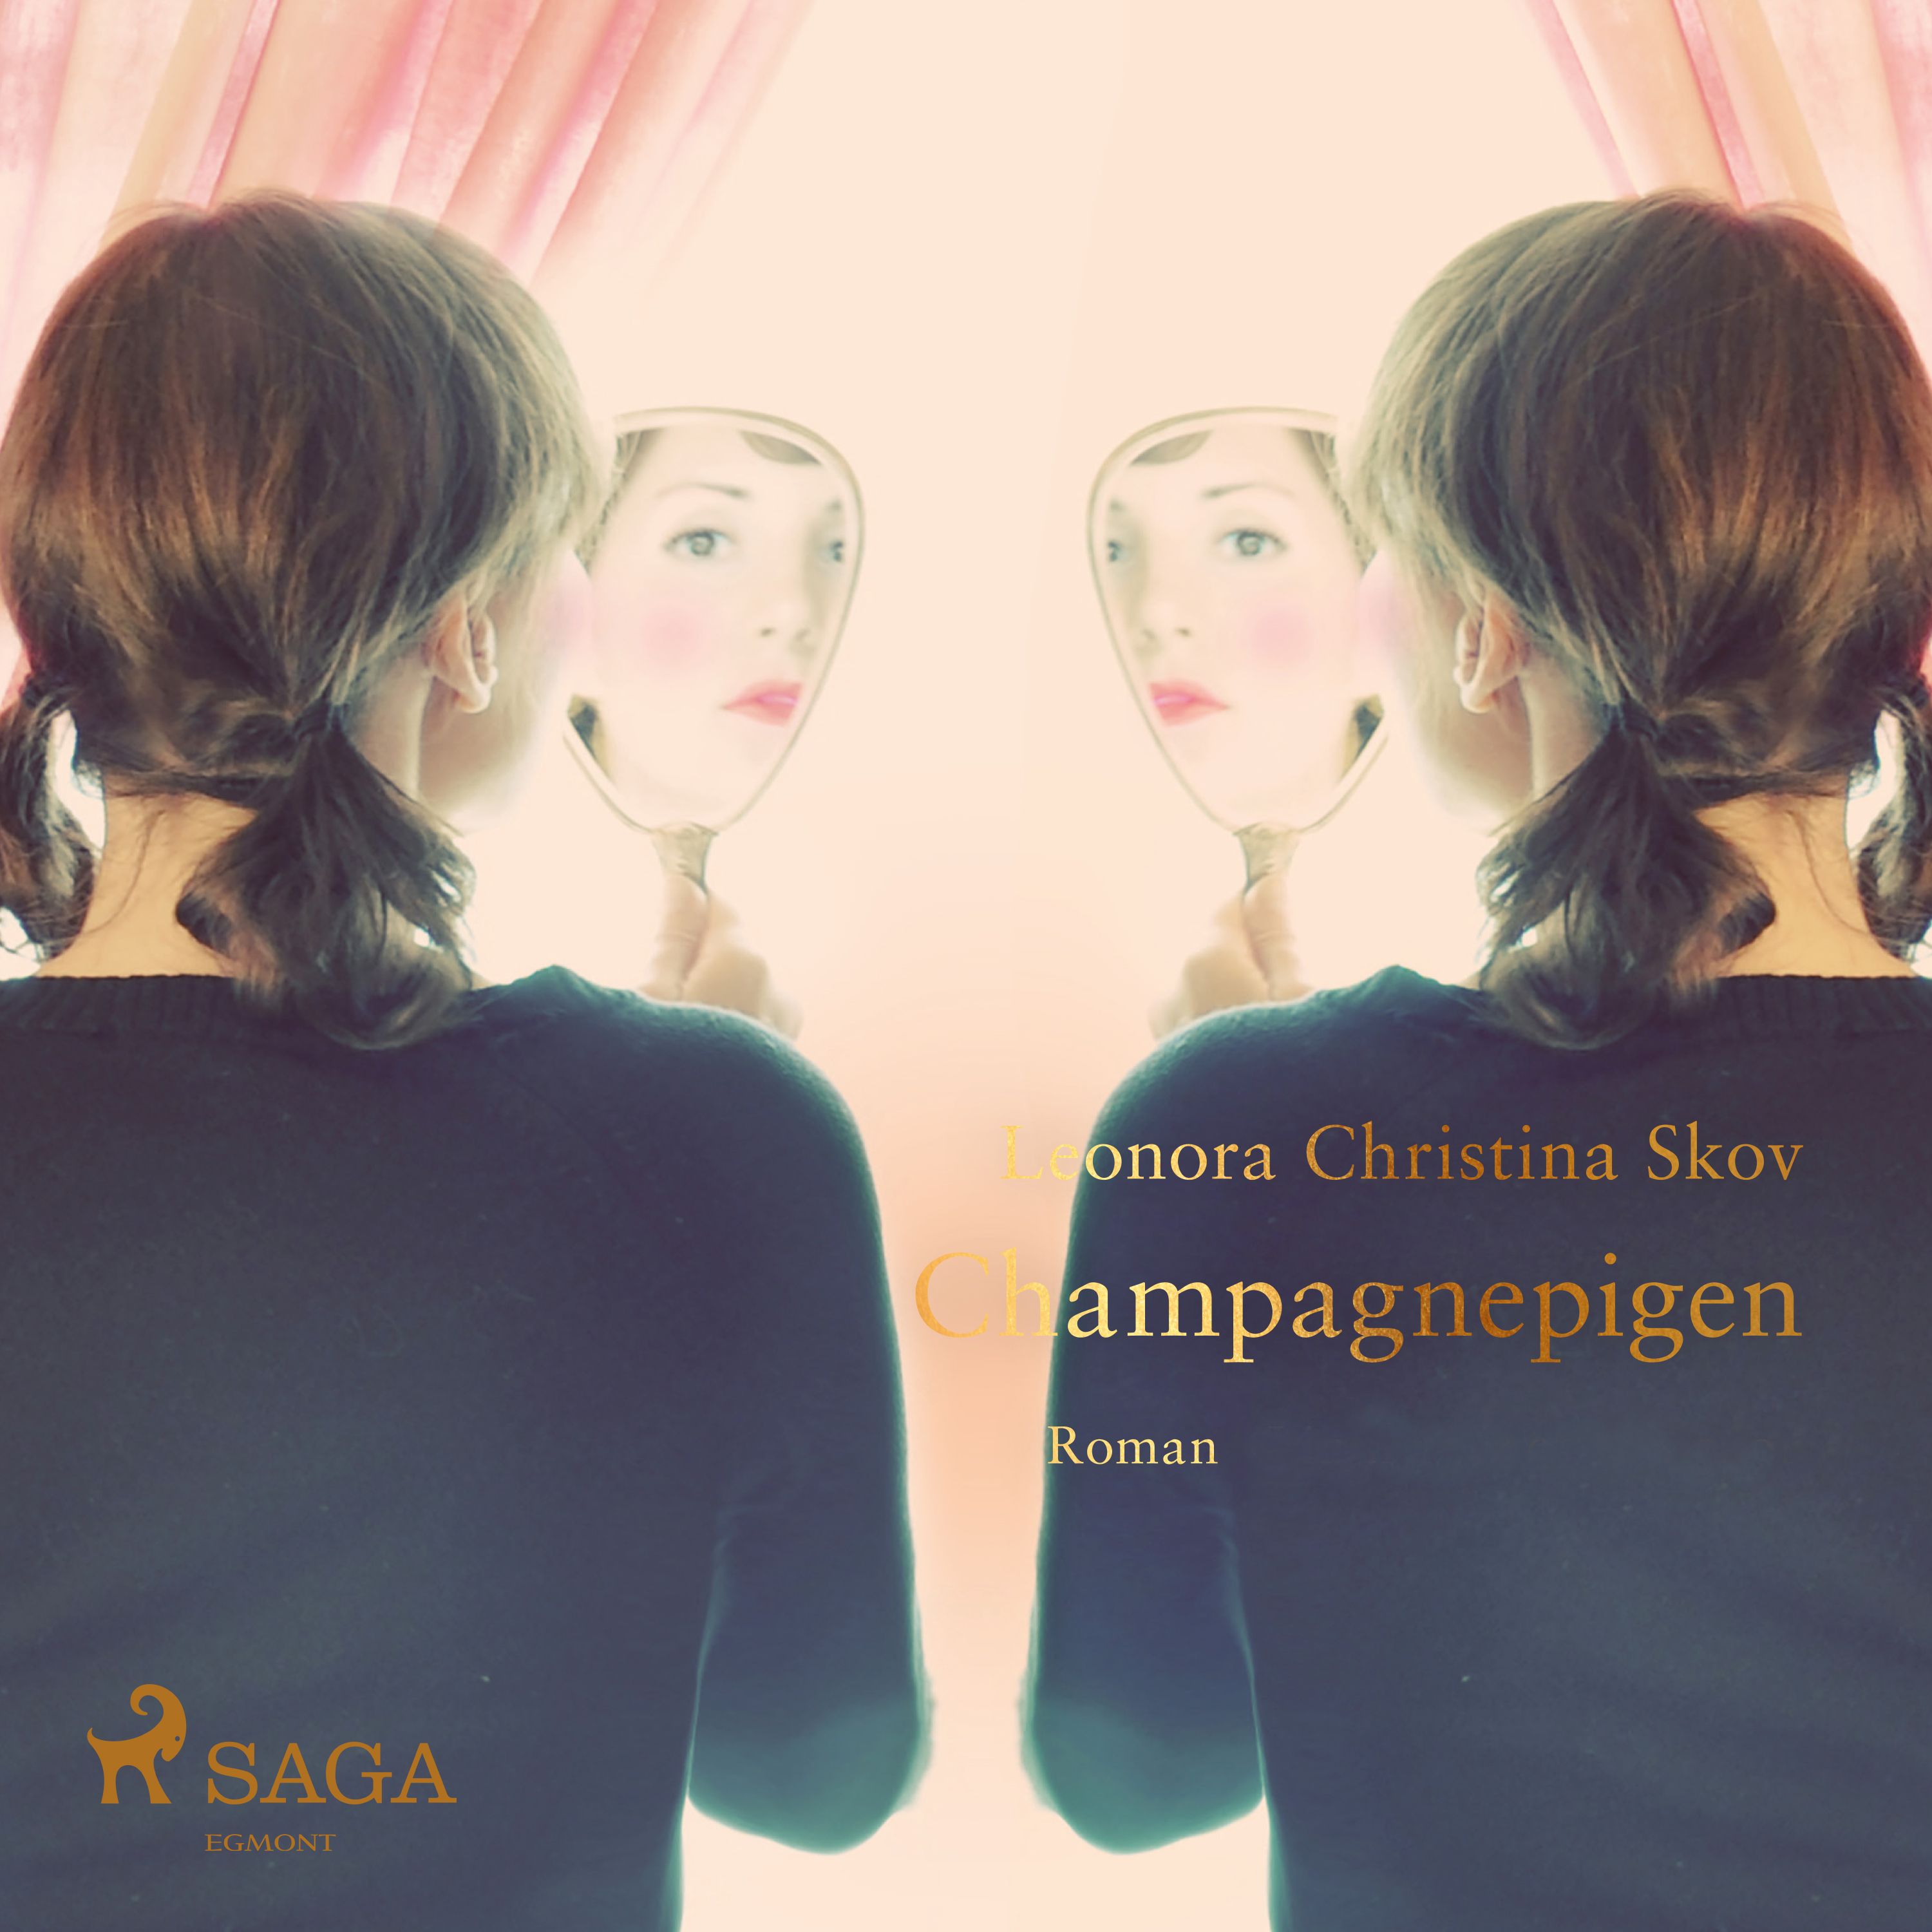 Champagnepigen, audiobook by Leonora Christina Skov